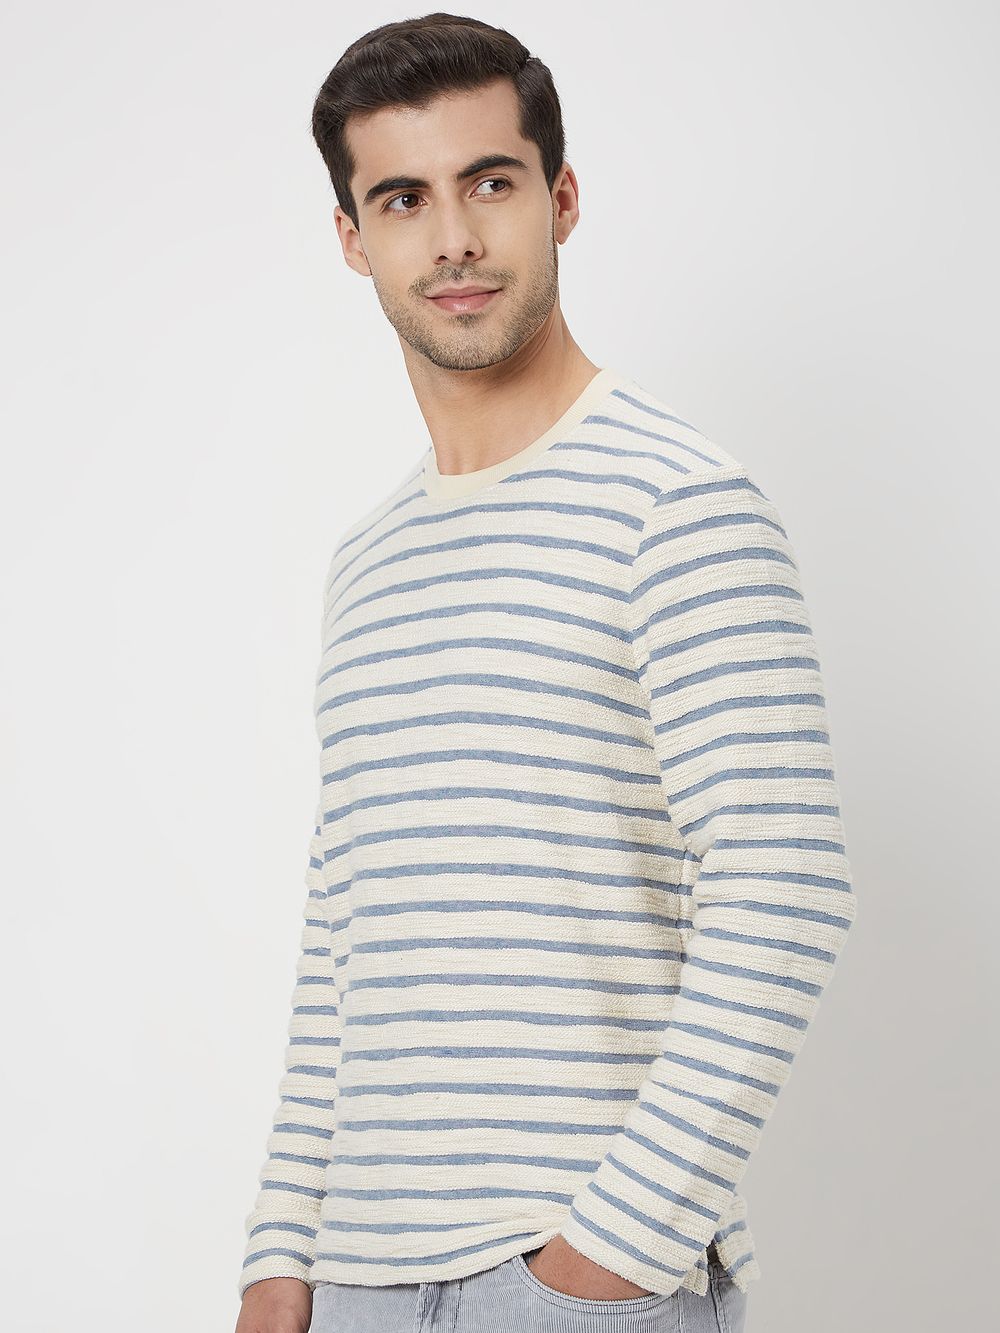 Off White & Blue Textured Stripe Jersey T-Shirt